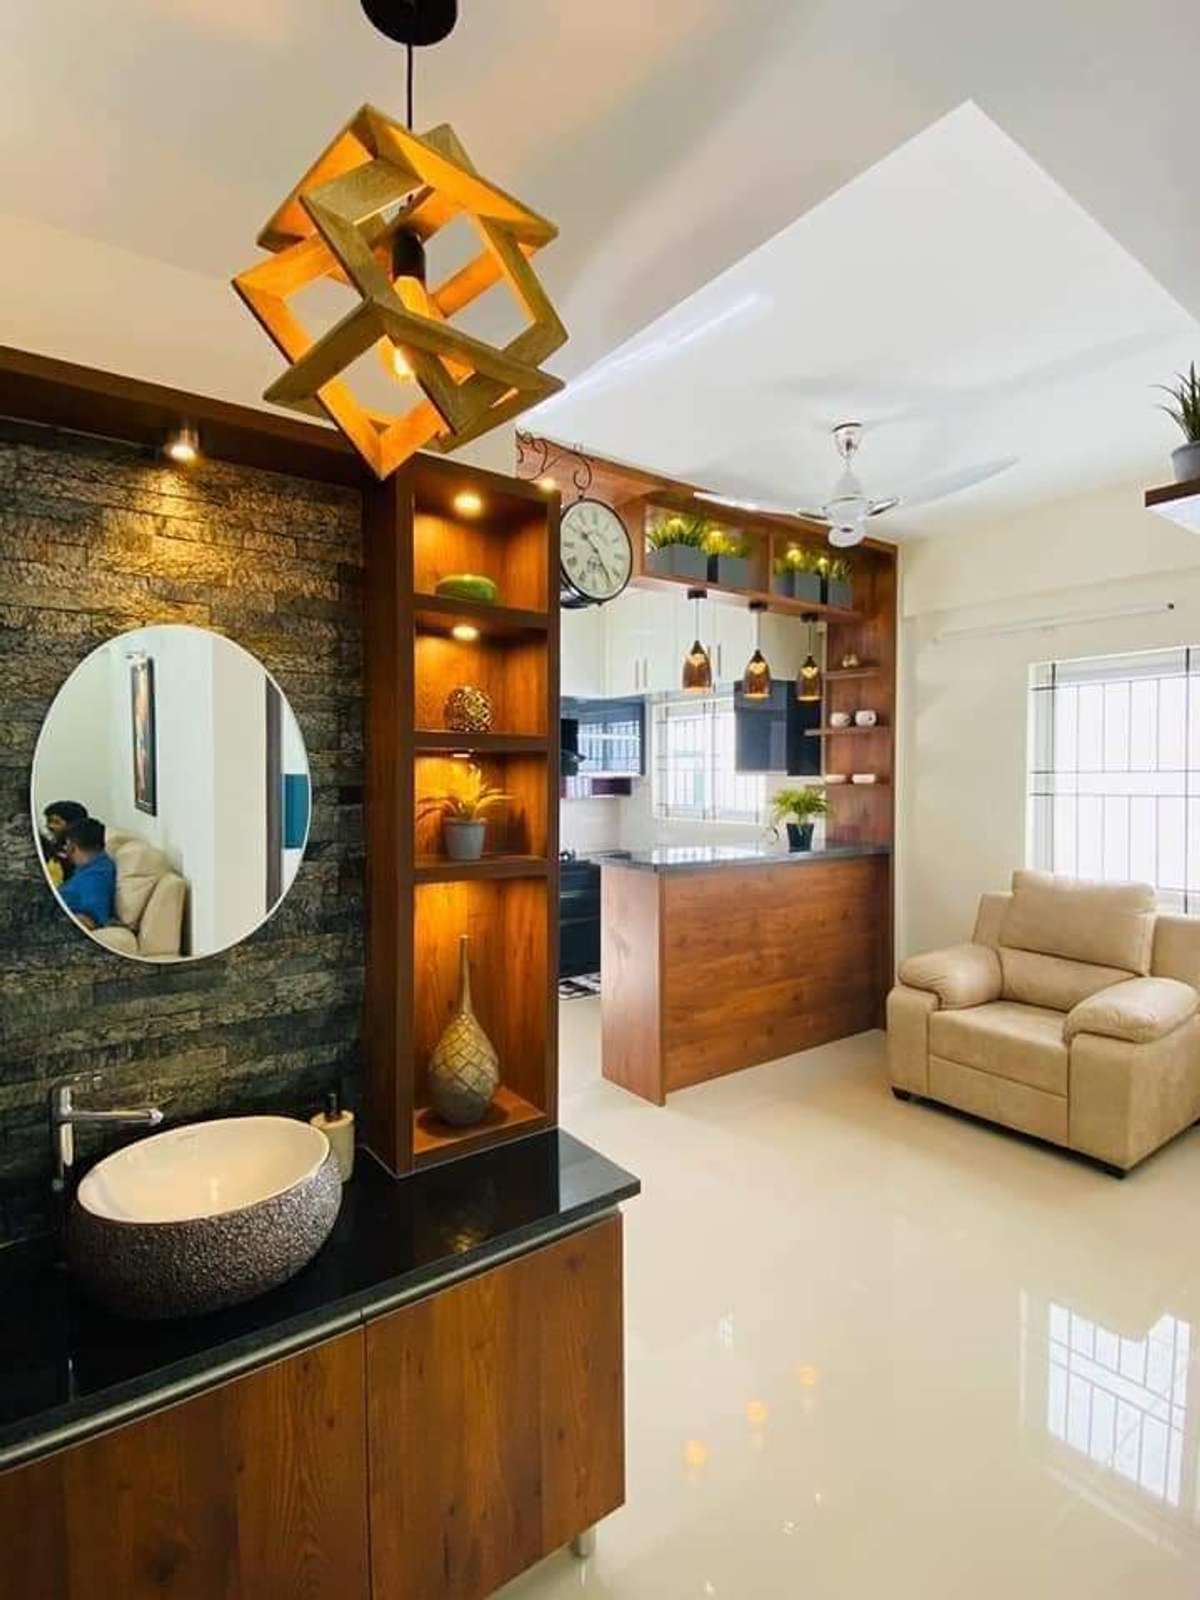 Bathroom, Lighting, Furniture Designs by Carpenter ЁЯЩП рдлреЙрд▓реЛ рдХрд░реЛ рджрд┐рд▓реНрд▓реА рдХрд╛рд░рдкреЗрдВрдЯрд░ рдХреЛ, Delhi | Kolo